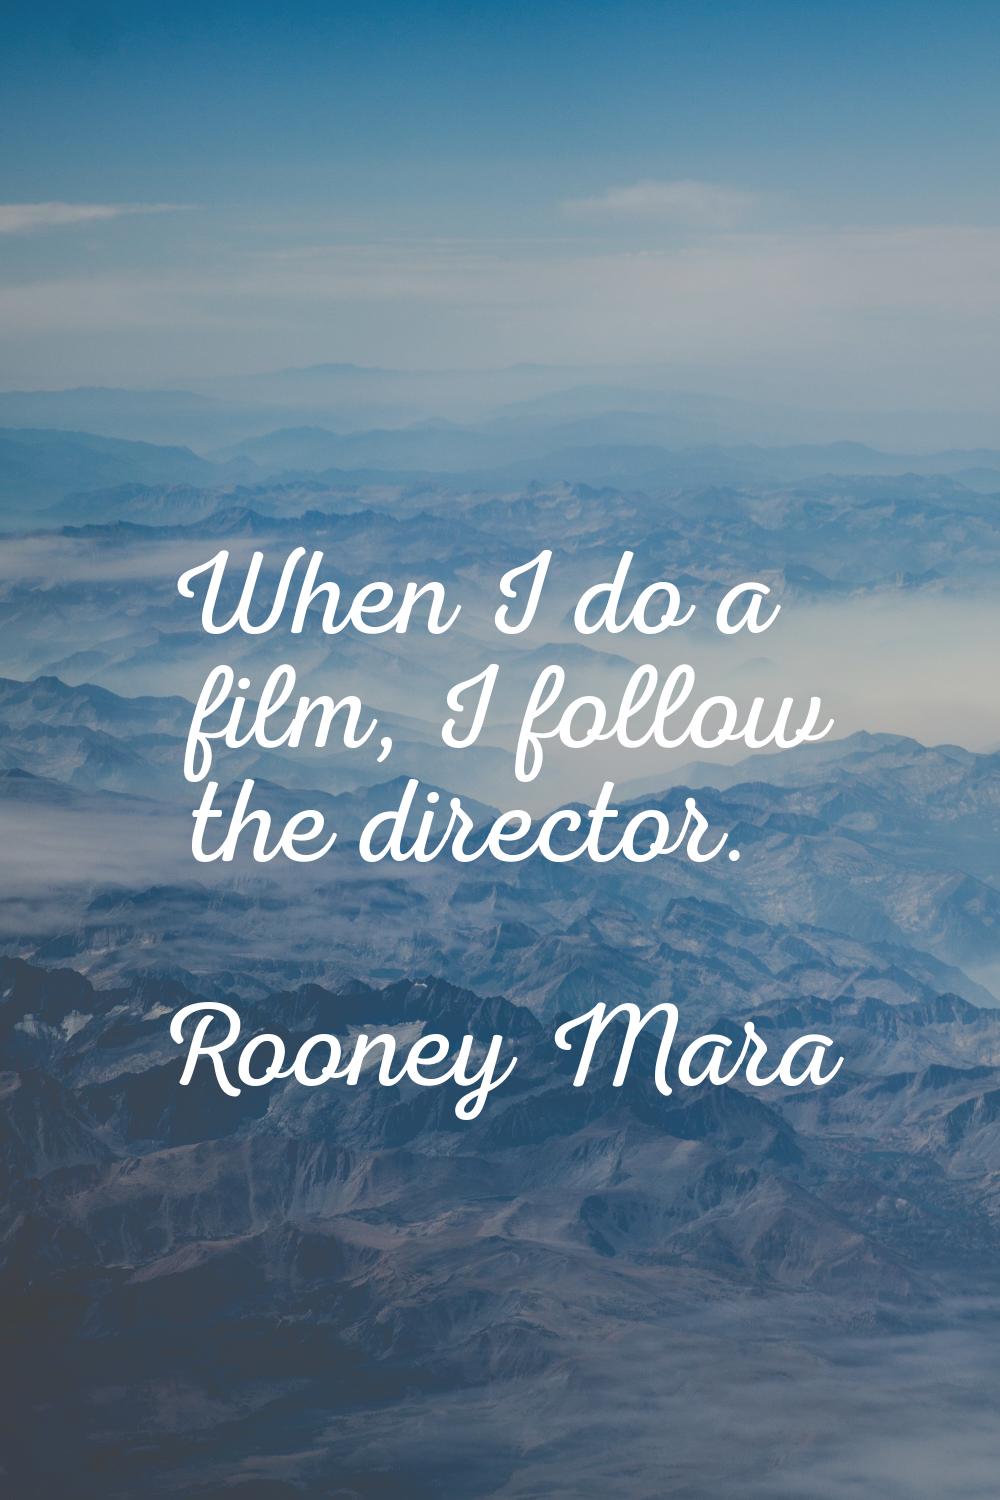 When I do a film, I follow the director.